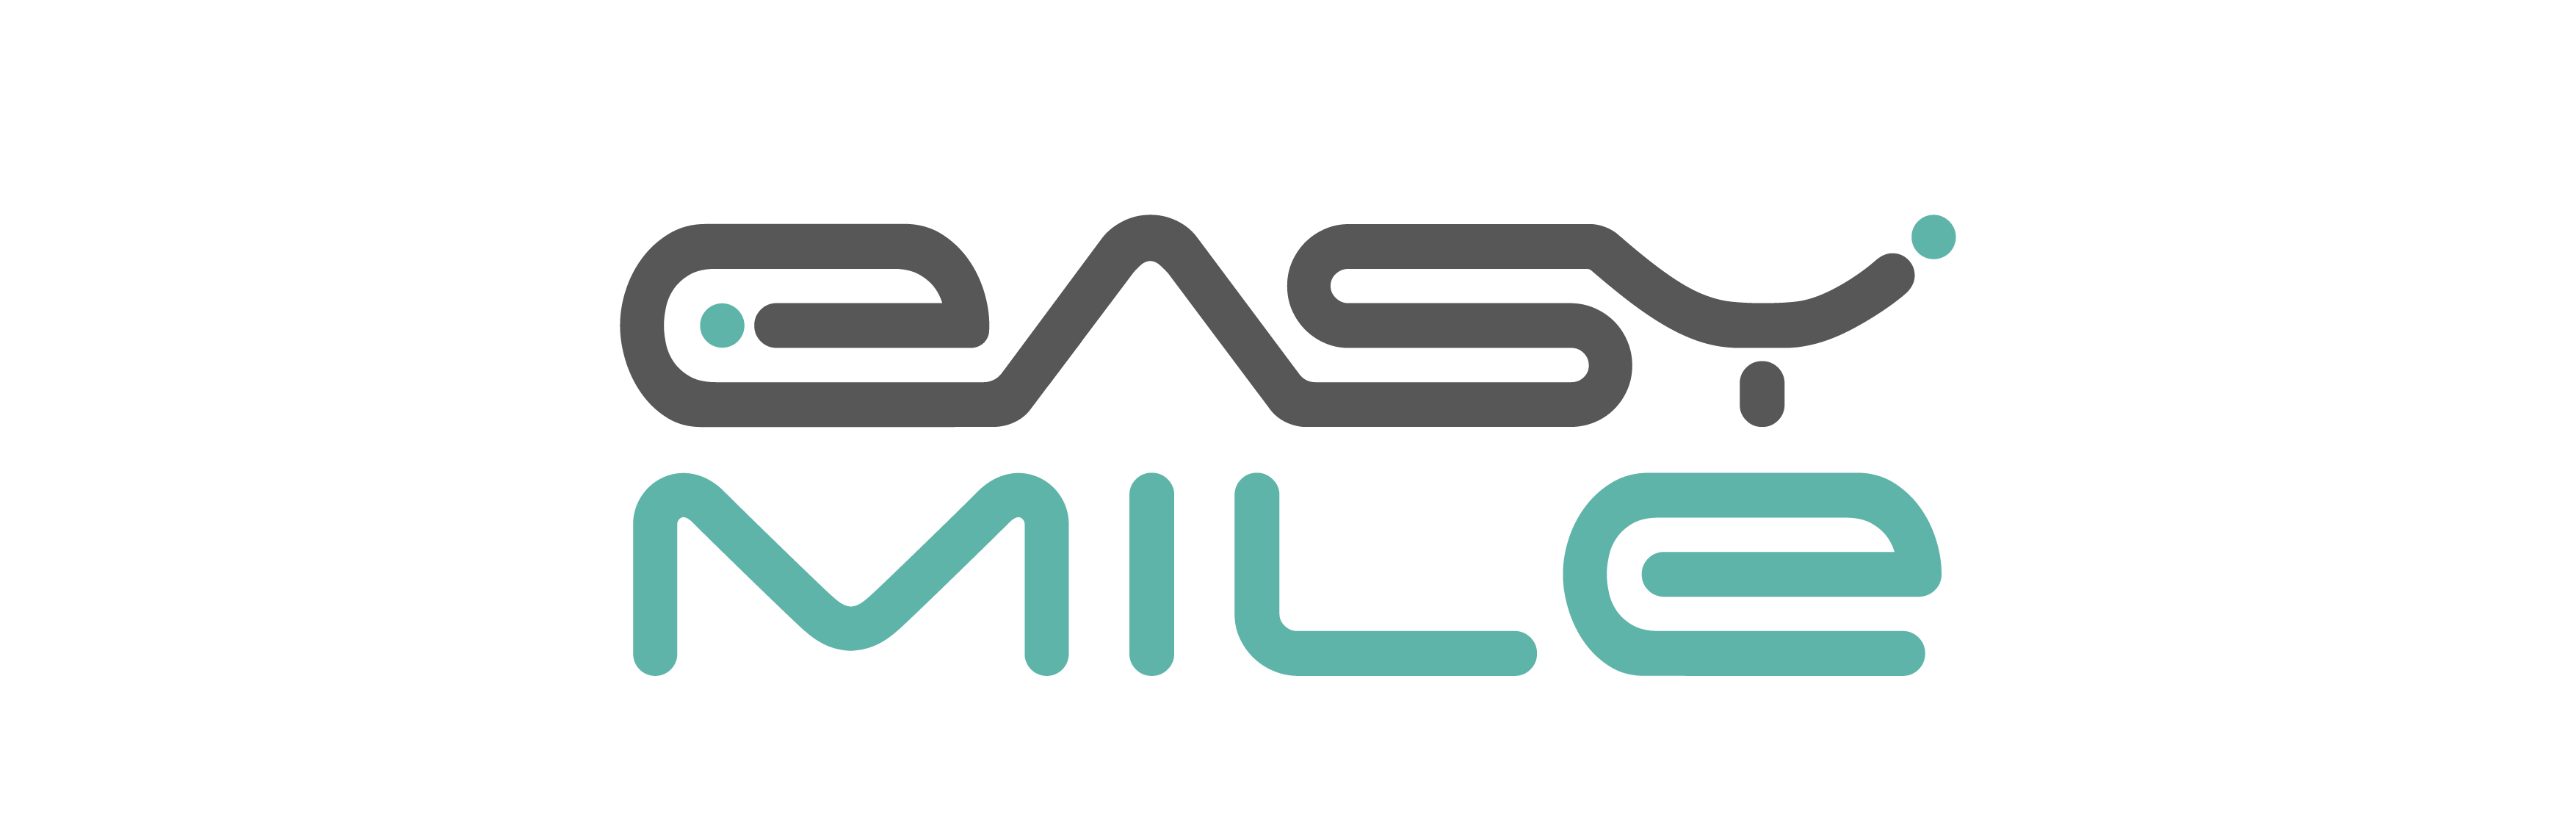 EasyMile-logo